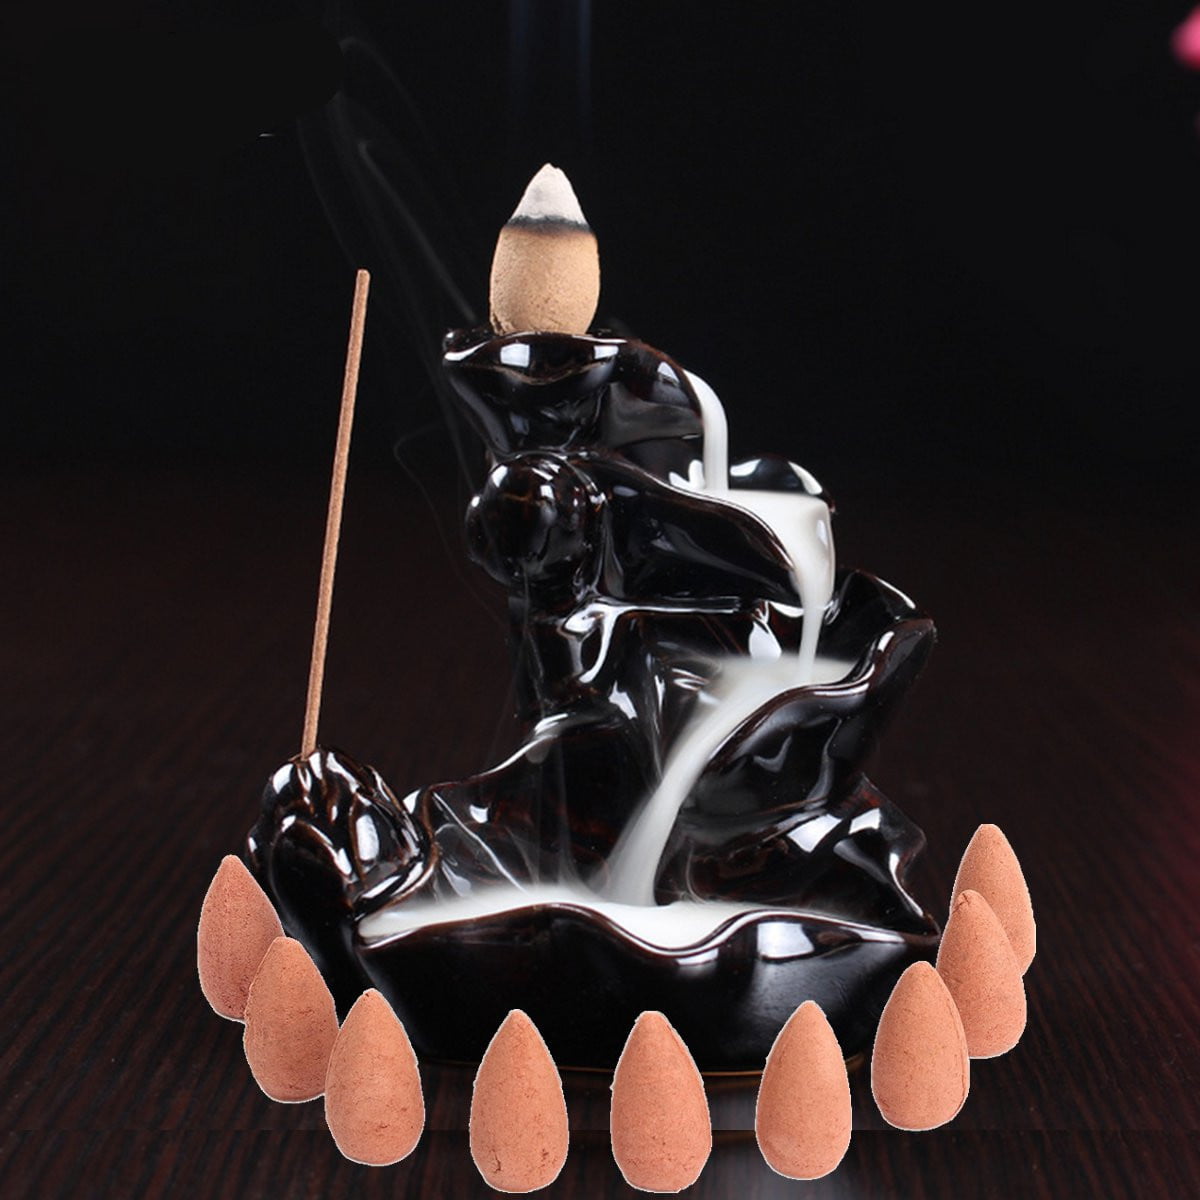 Two Fishes Backflow Incense Burner Holder Handmade Ceramic Incense Burner Home Decoration with 10 Incense Cones